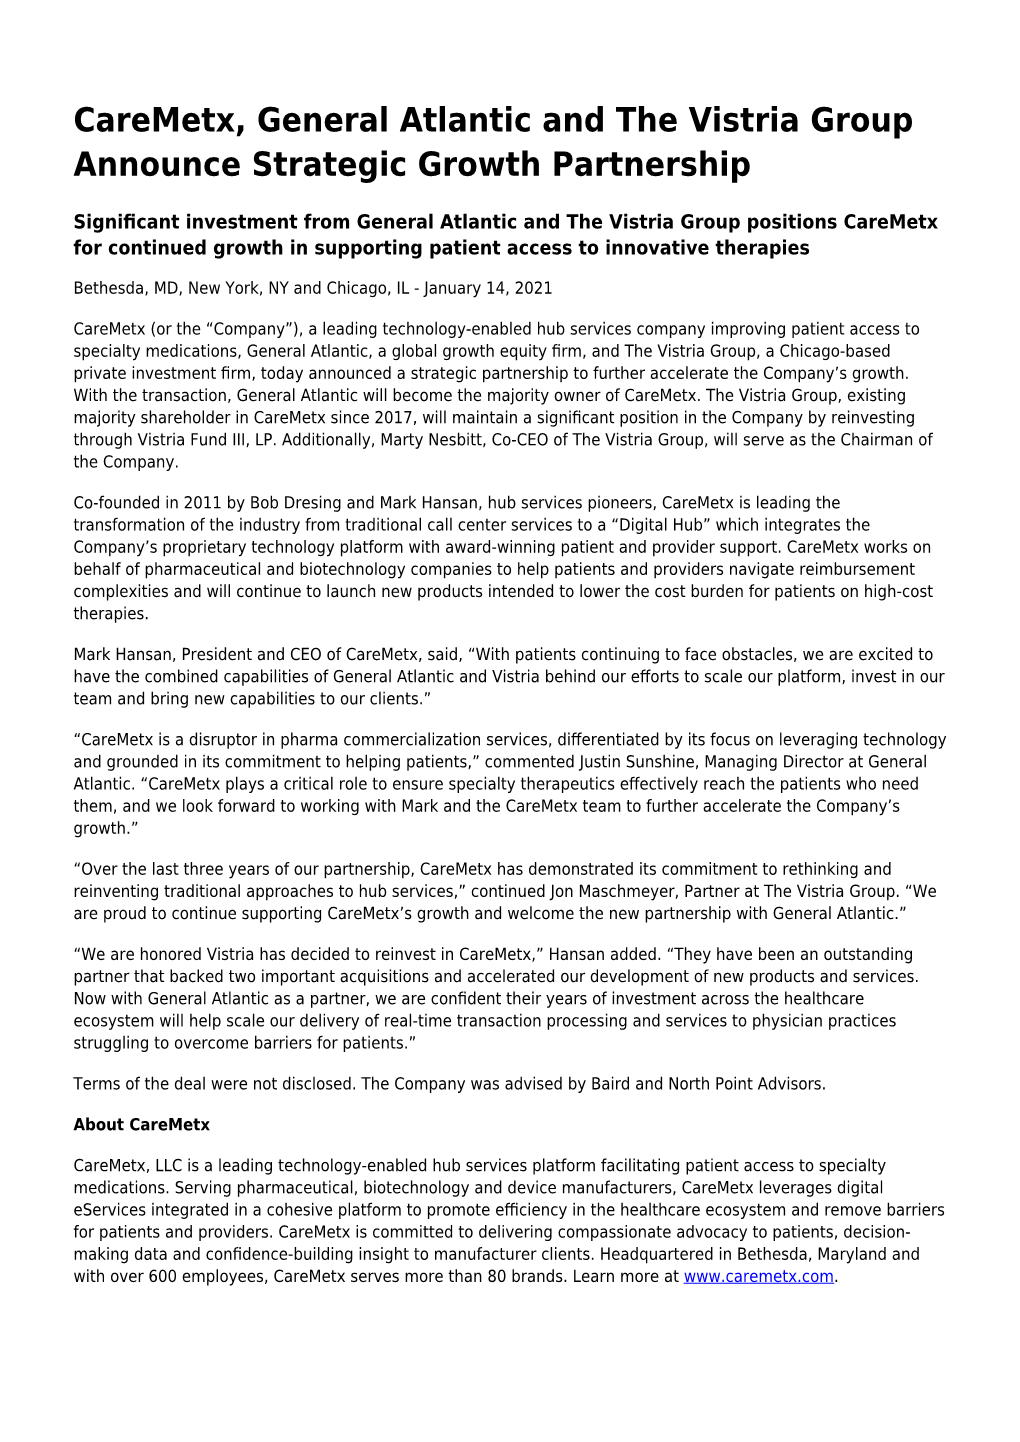 Caremetx, General Atlantic and the Vistria Group Announce Strategic Growth Partnership